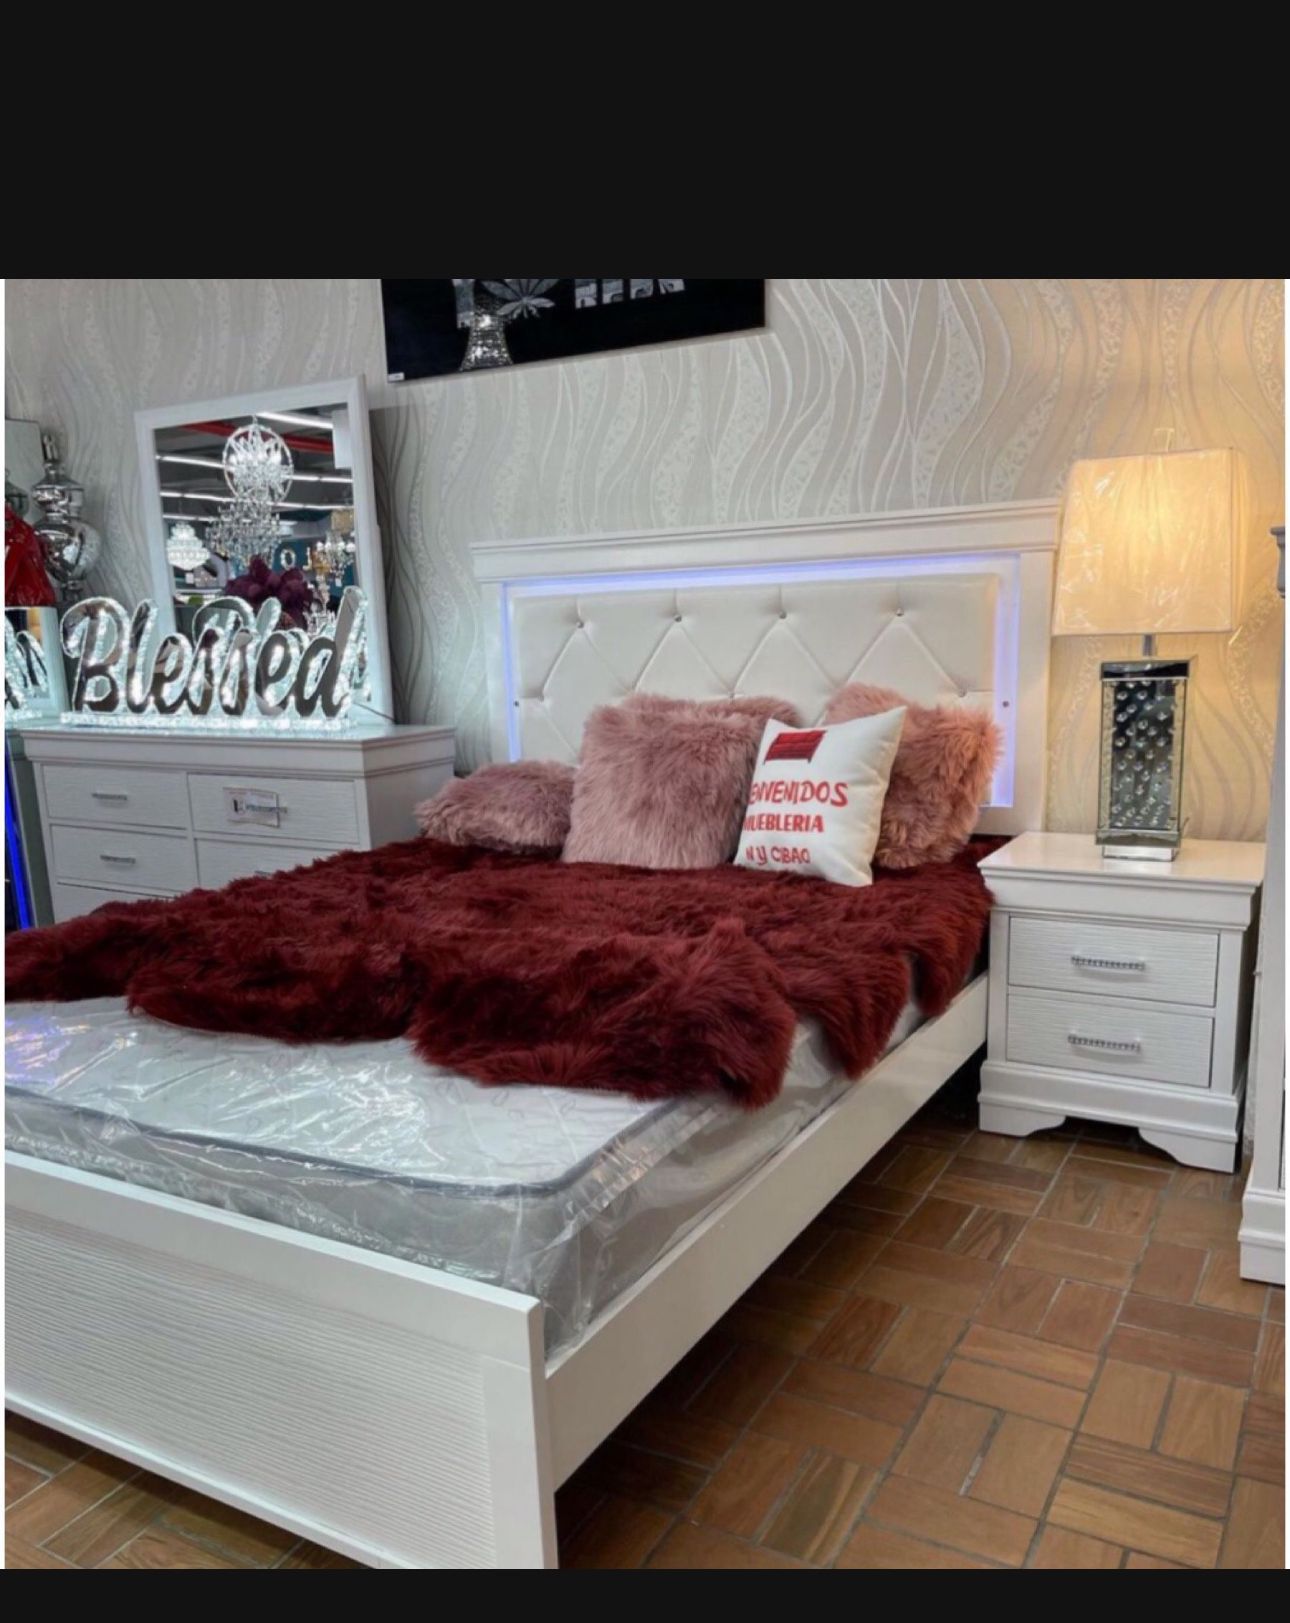 Brand new complete bedroom set for $999